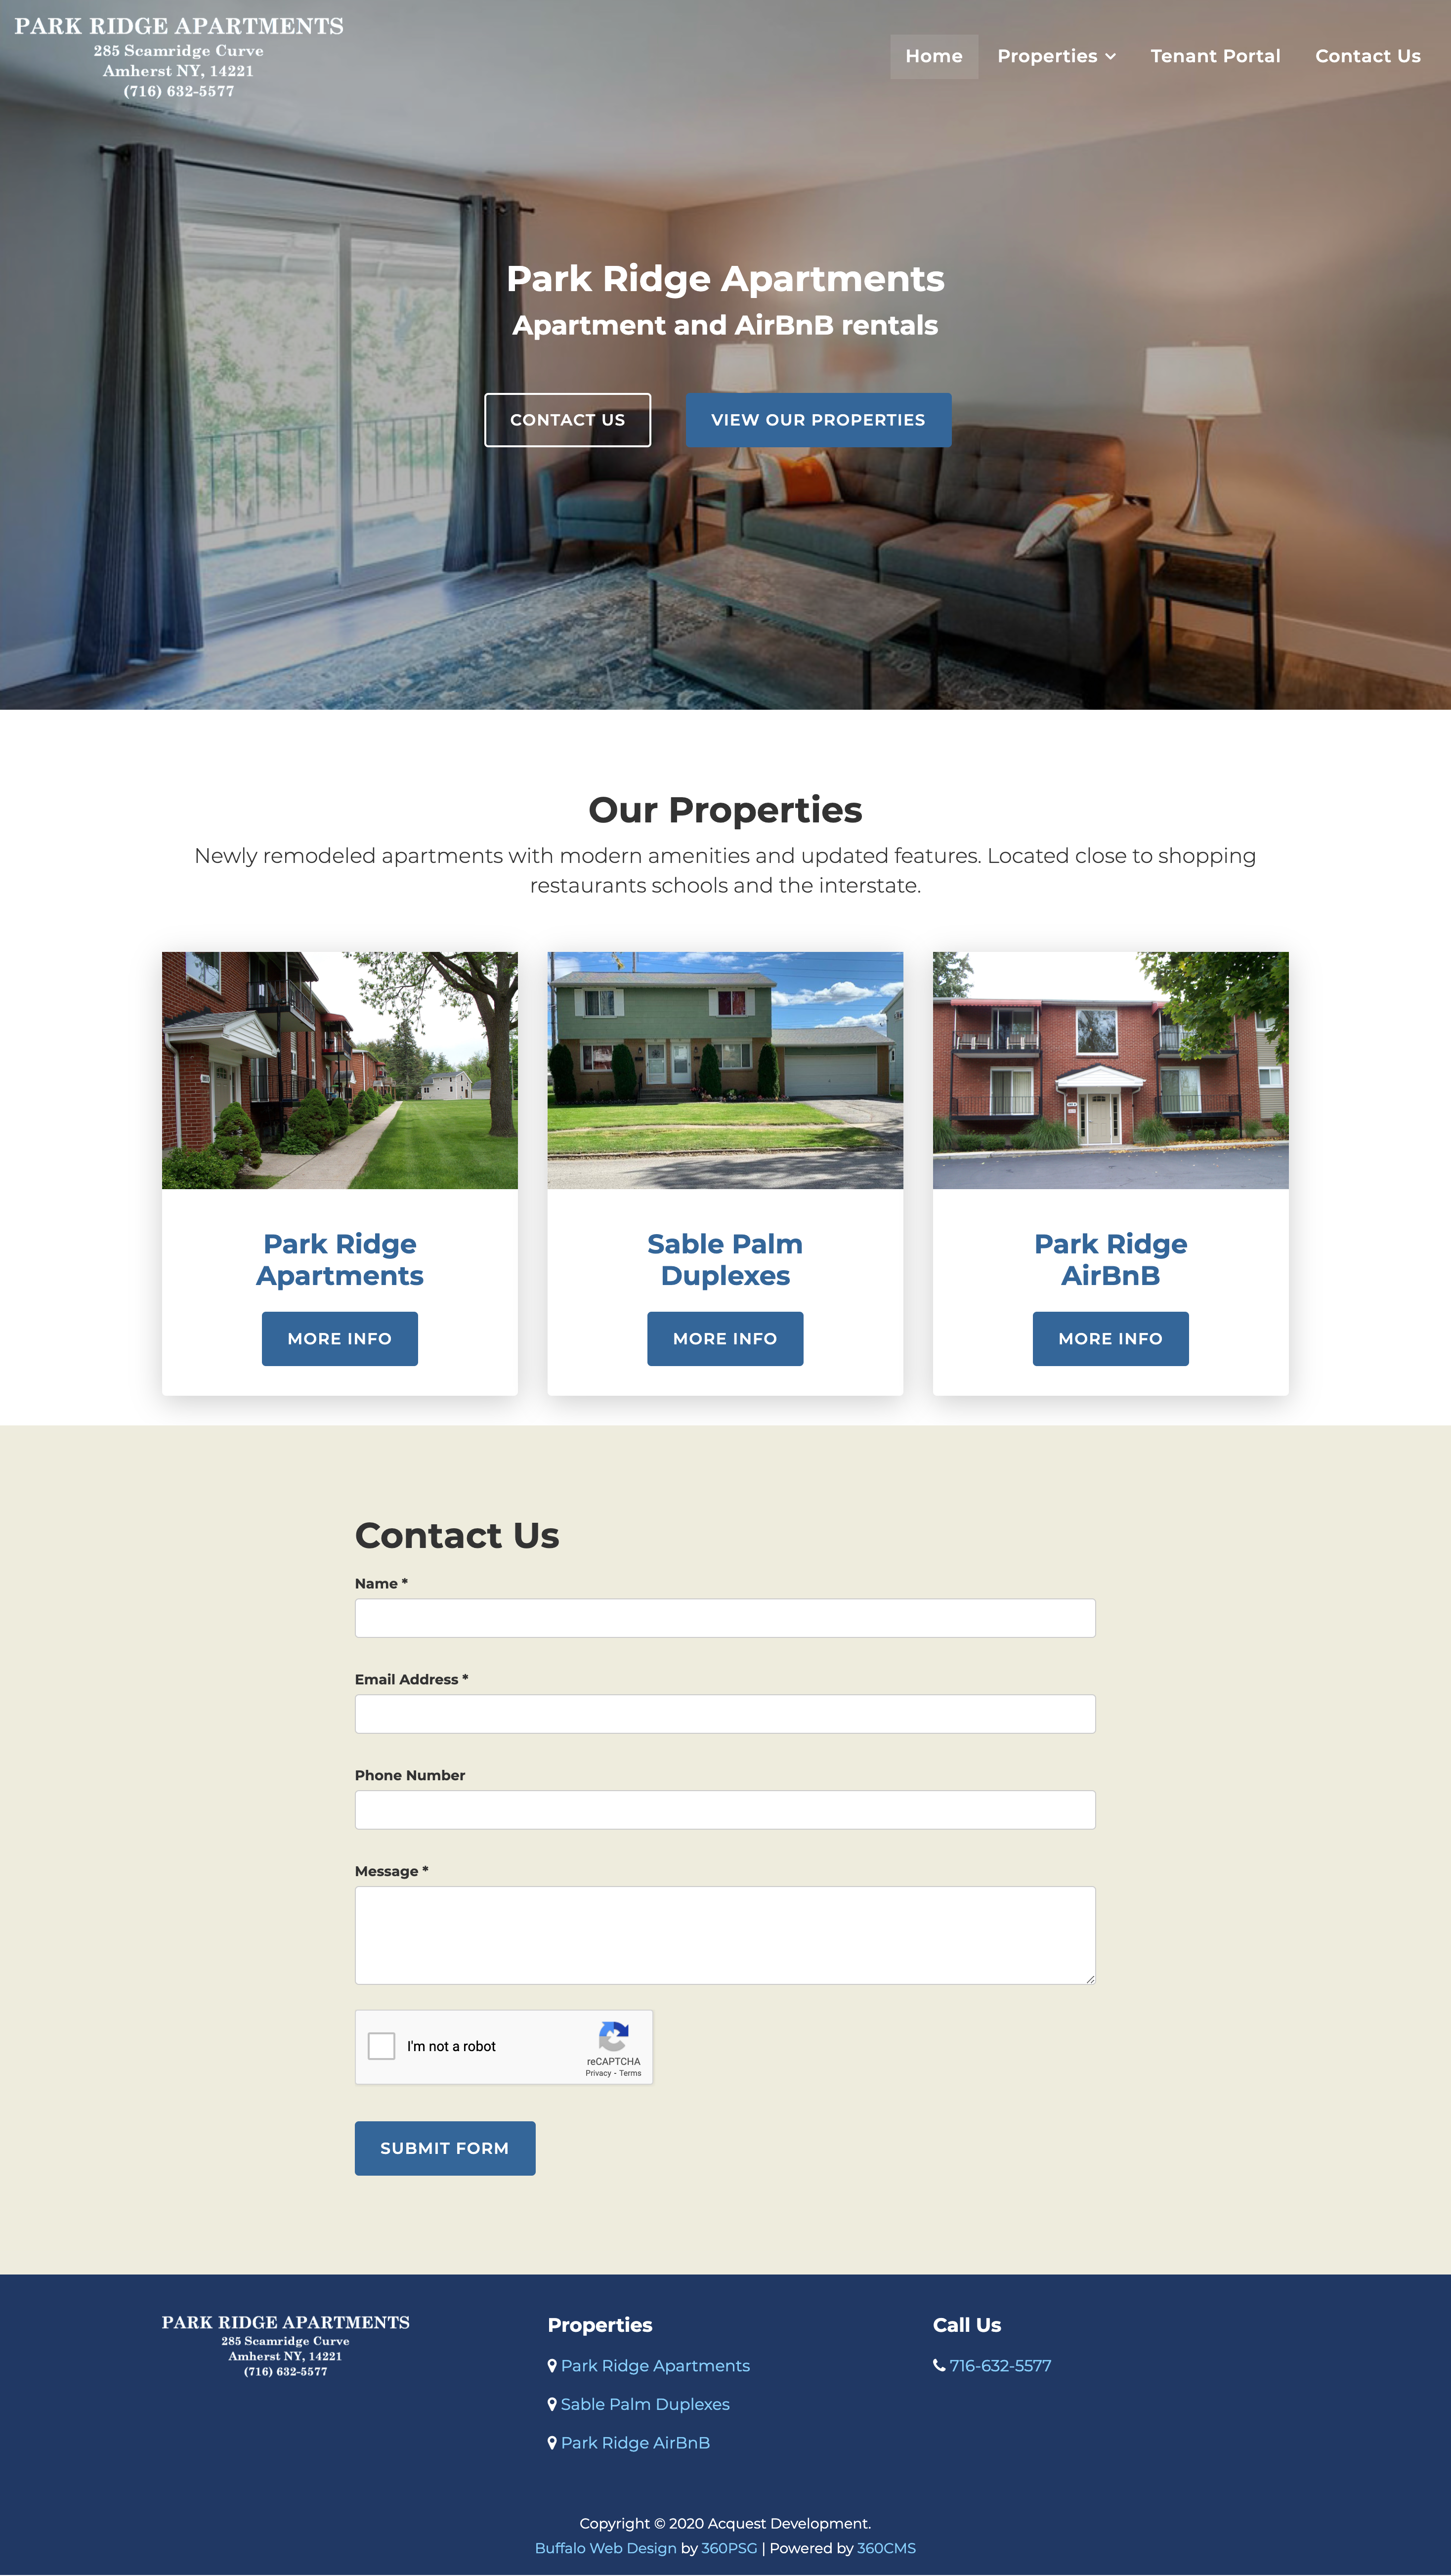 Park Ridge Apartments Website - Desktop